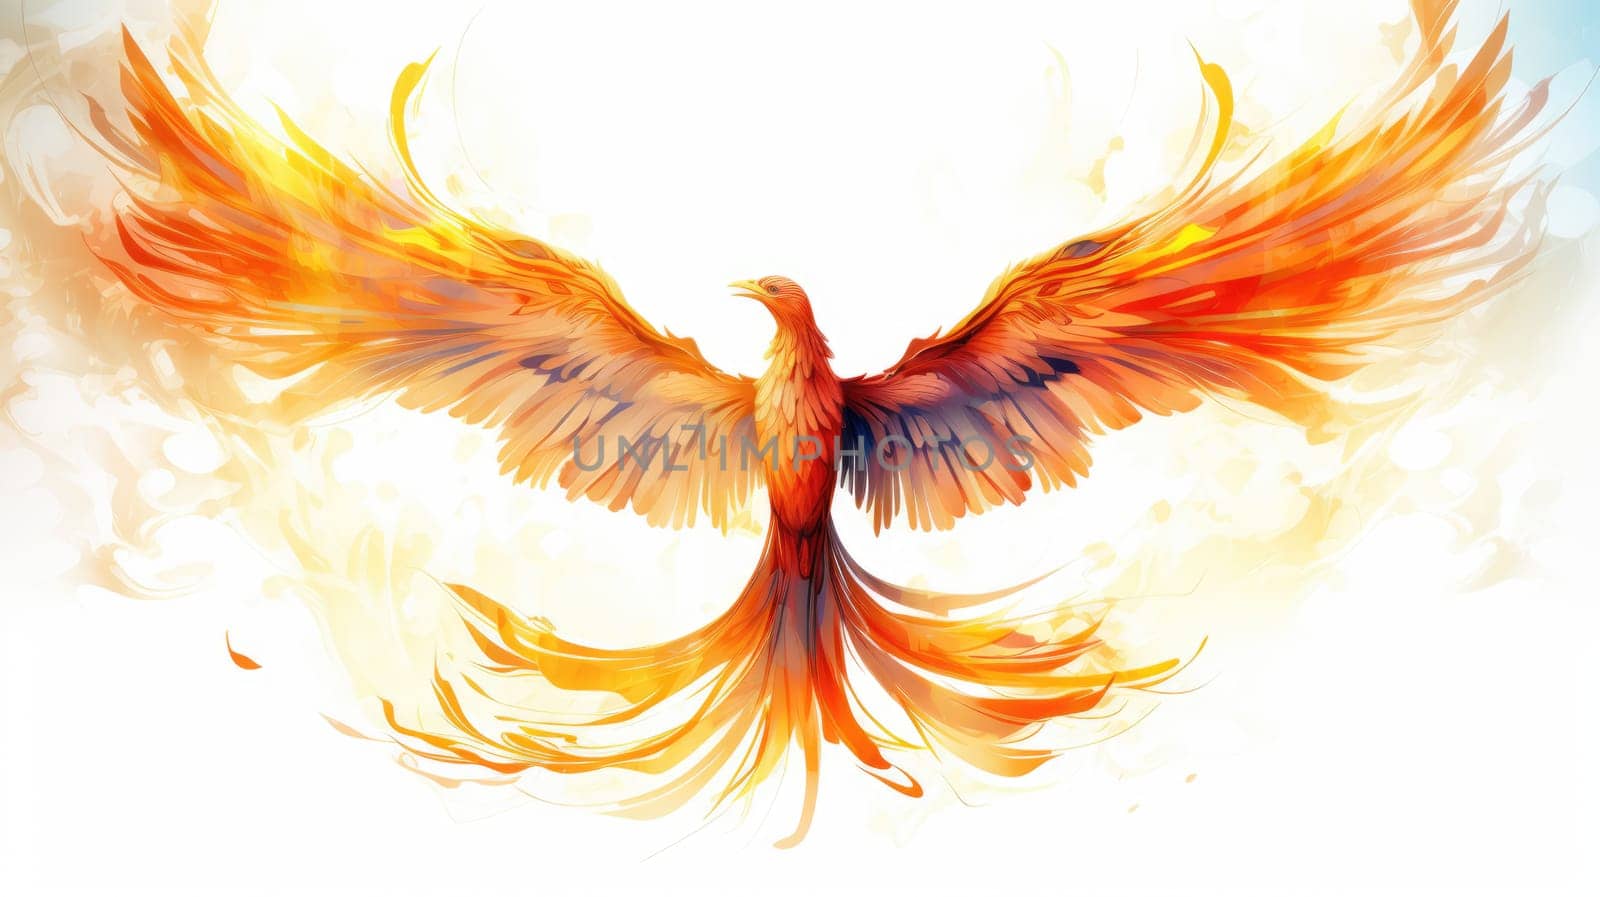 Solar phoenix watercolor illustration - AI generated. Solar, phoenix, fire, wings.